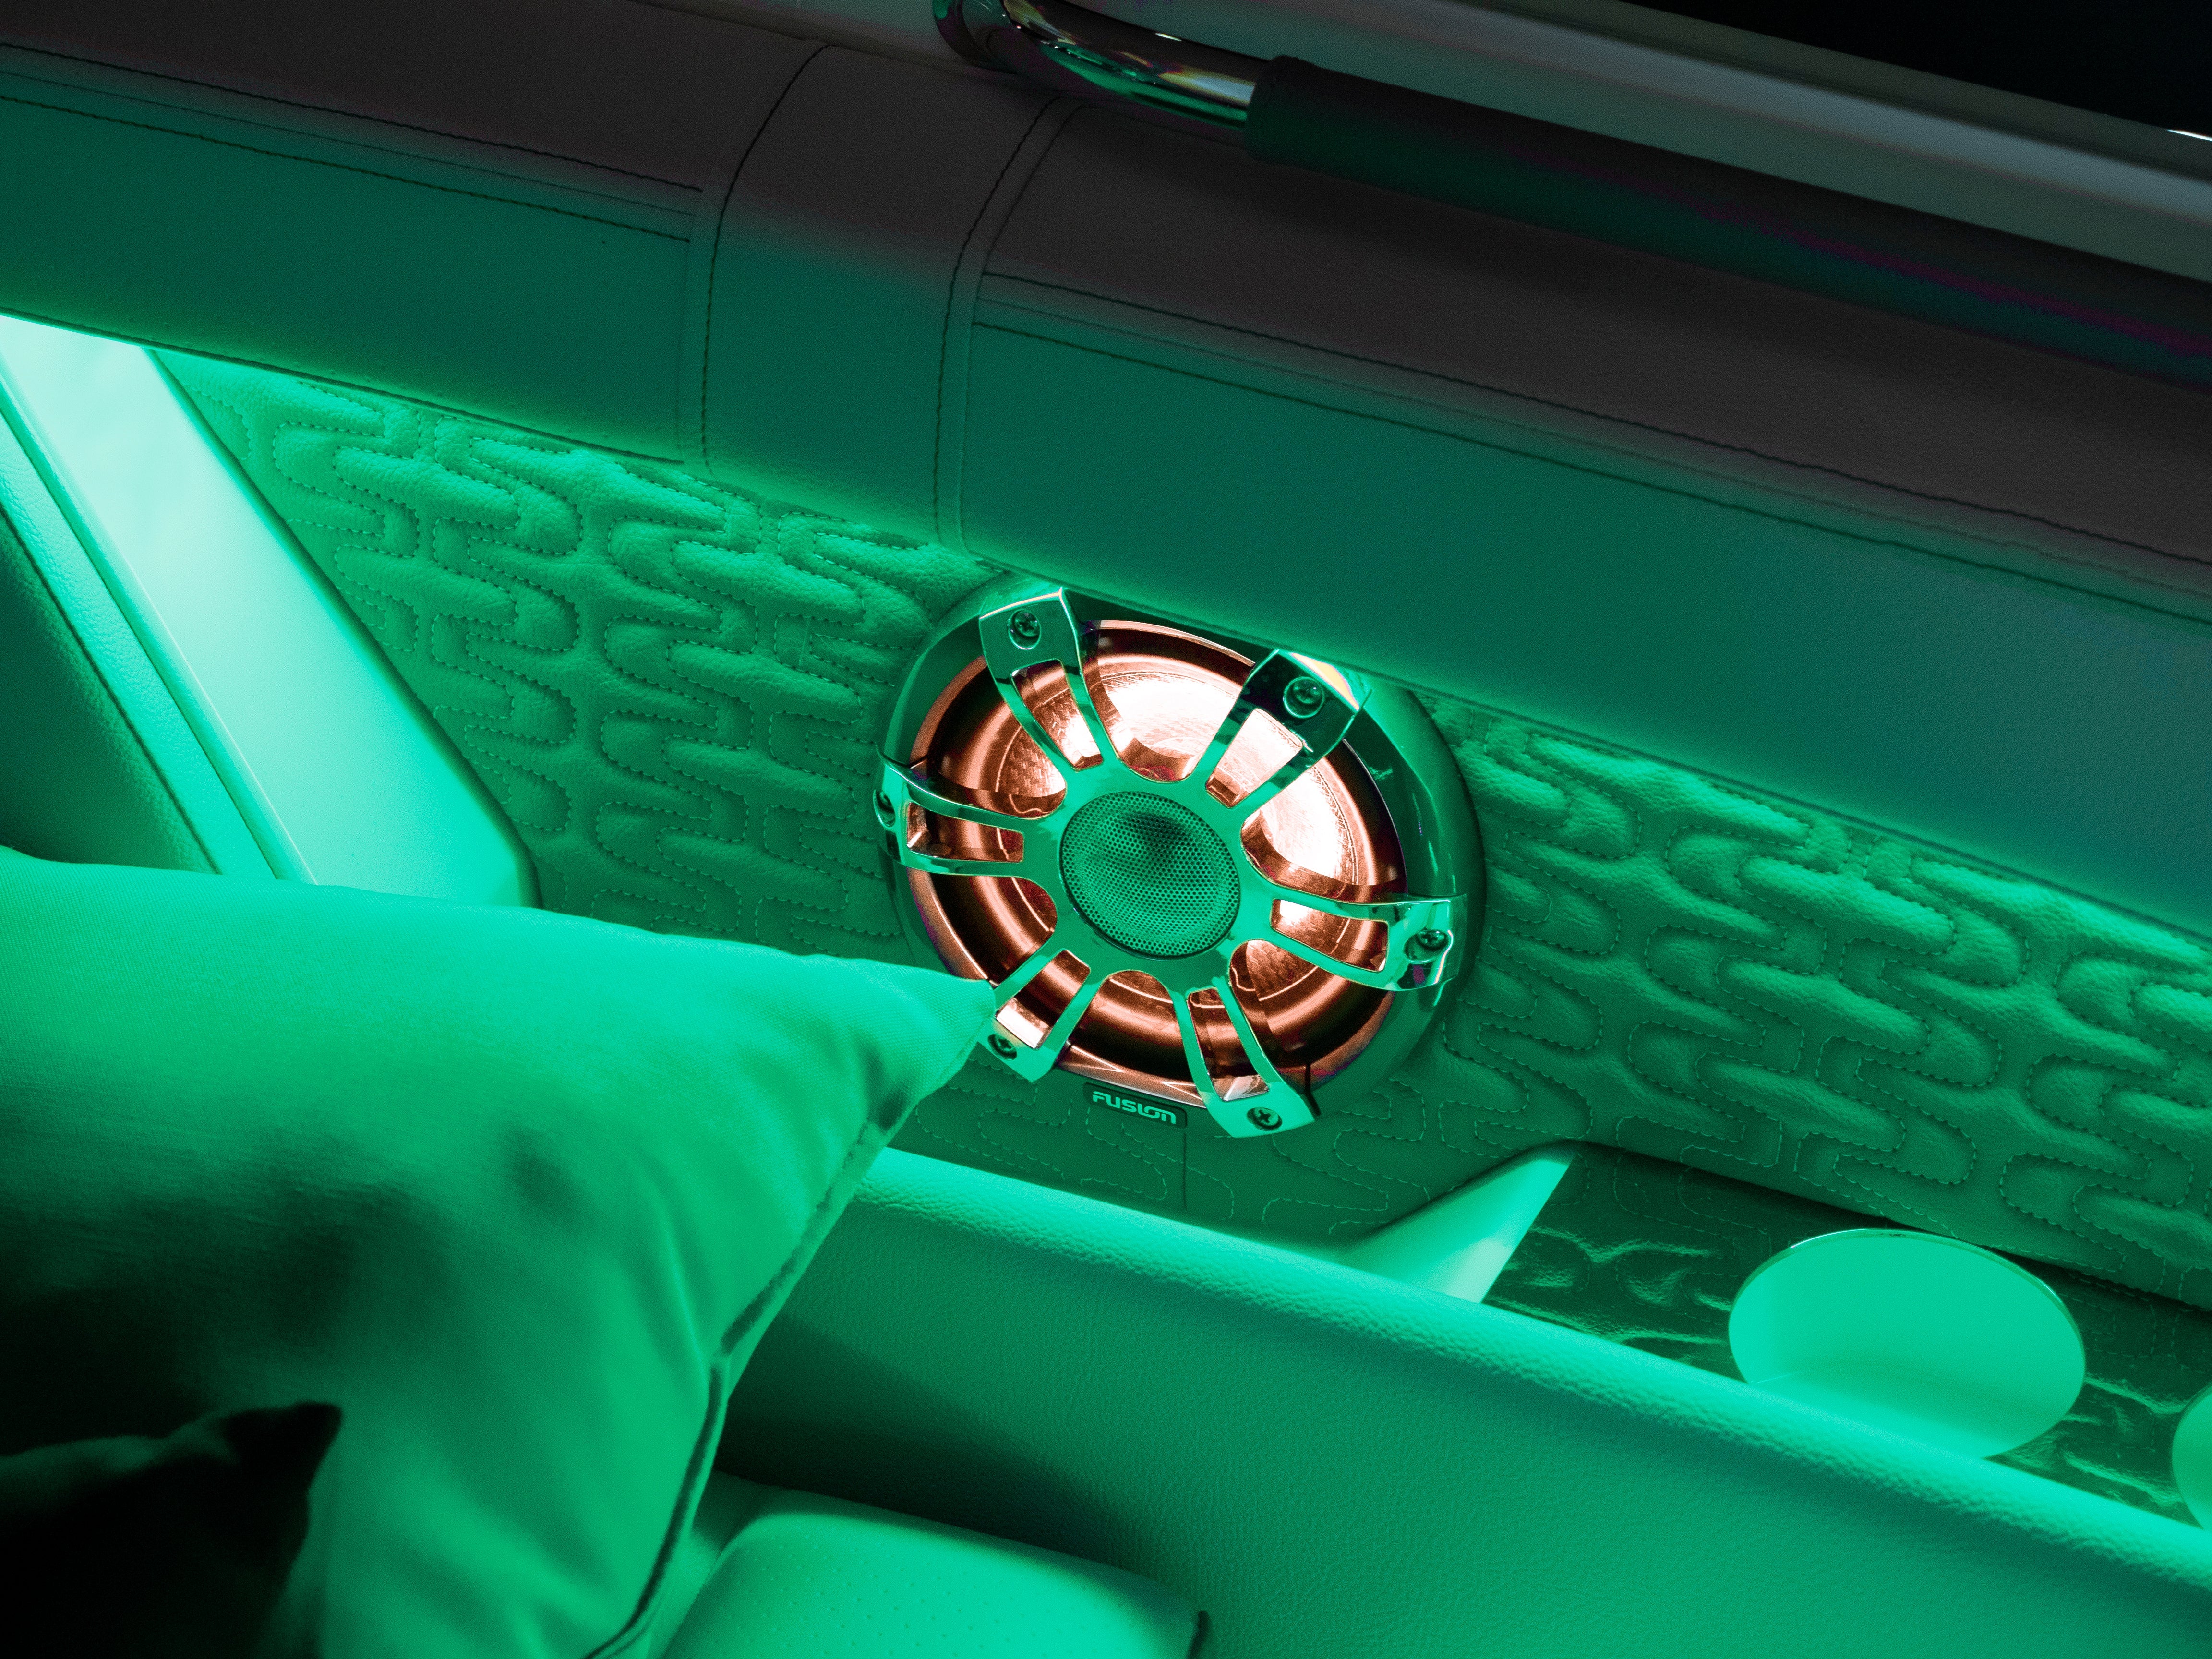 Garmin koaksial sportsmarinehøjttaler i krom med CRGBW LED-belysning